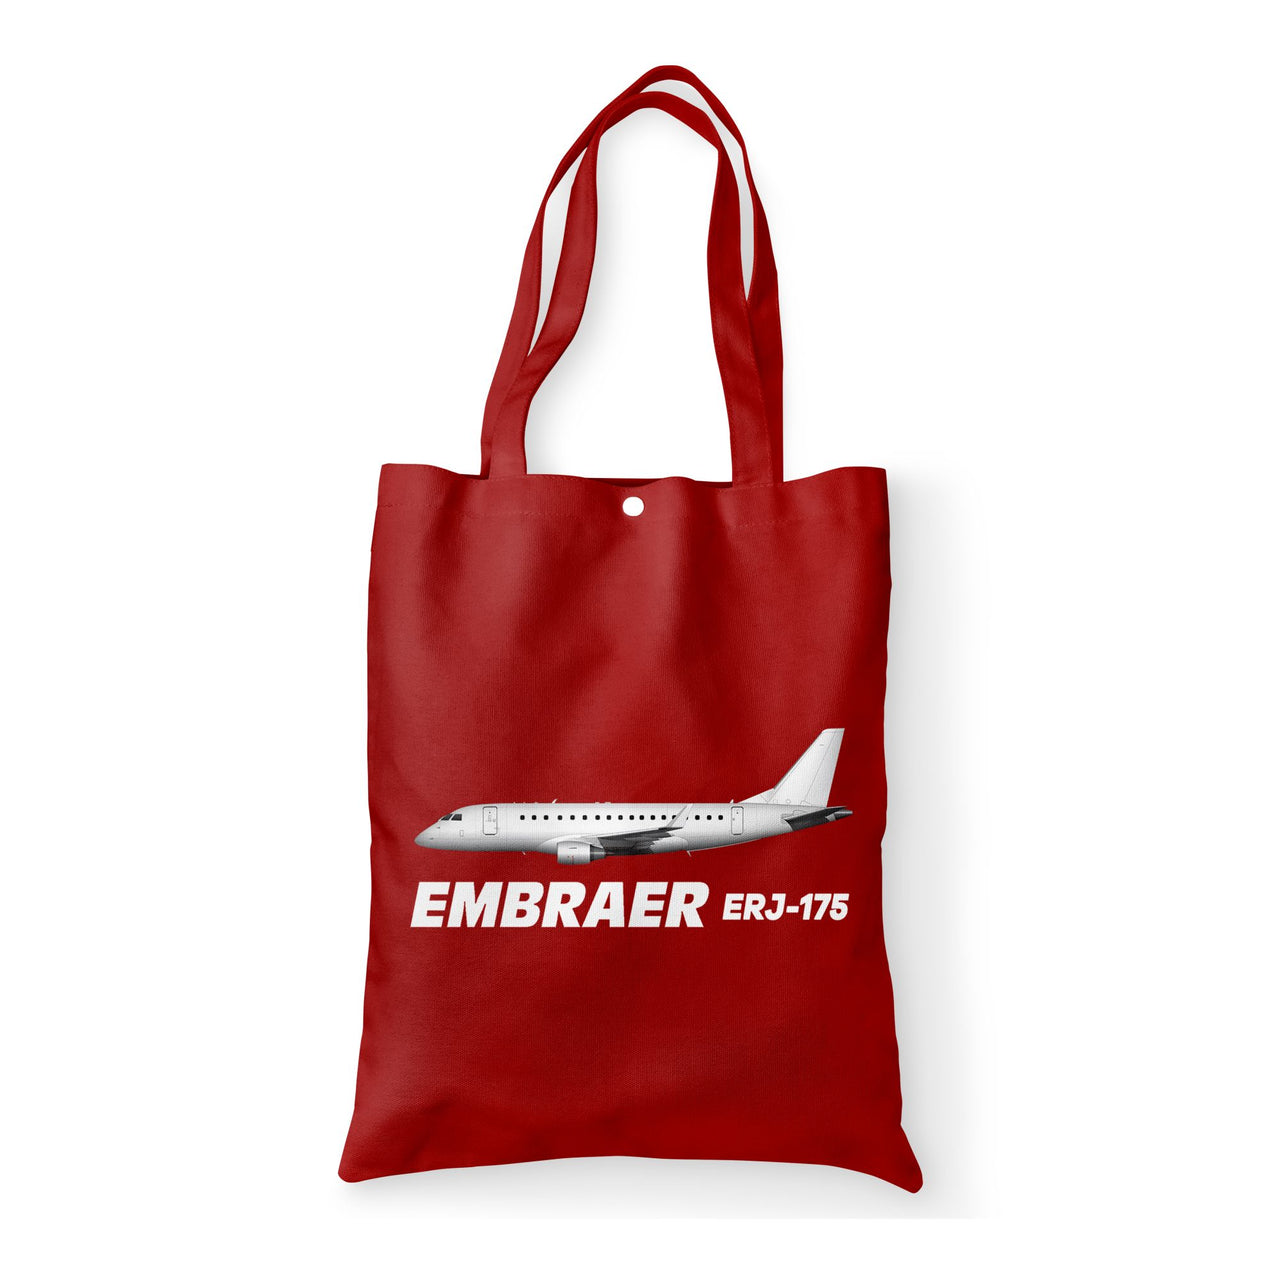 The Embraer ERJ-175 Designed Tote Bags